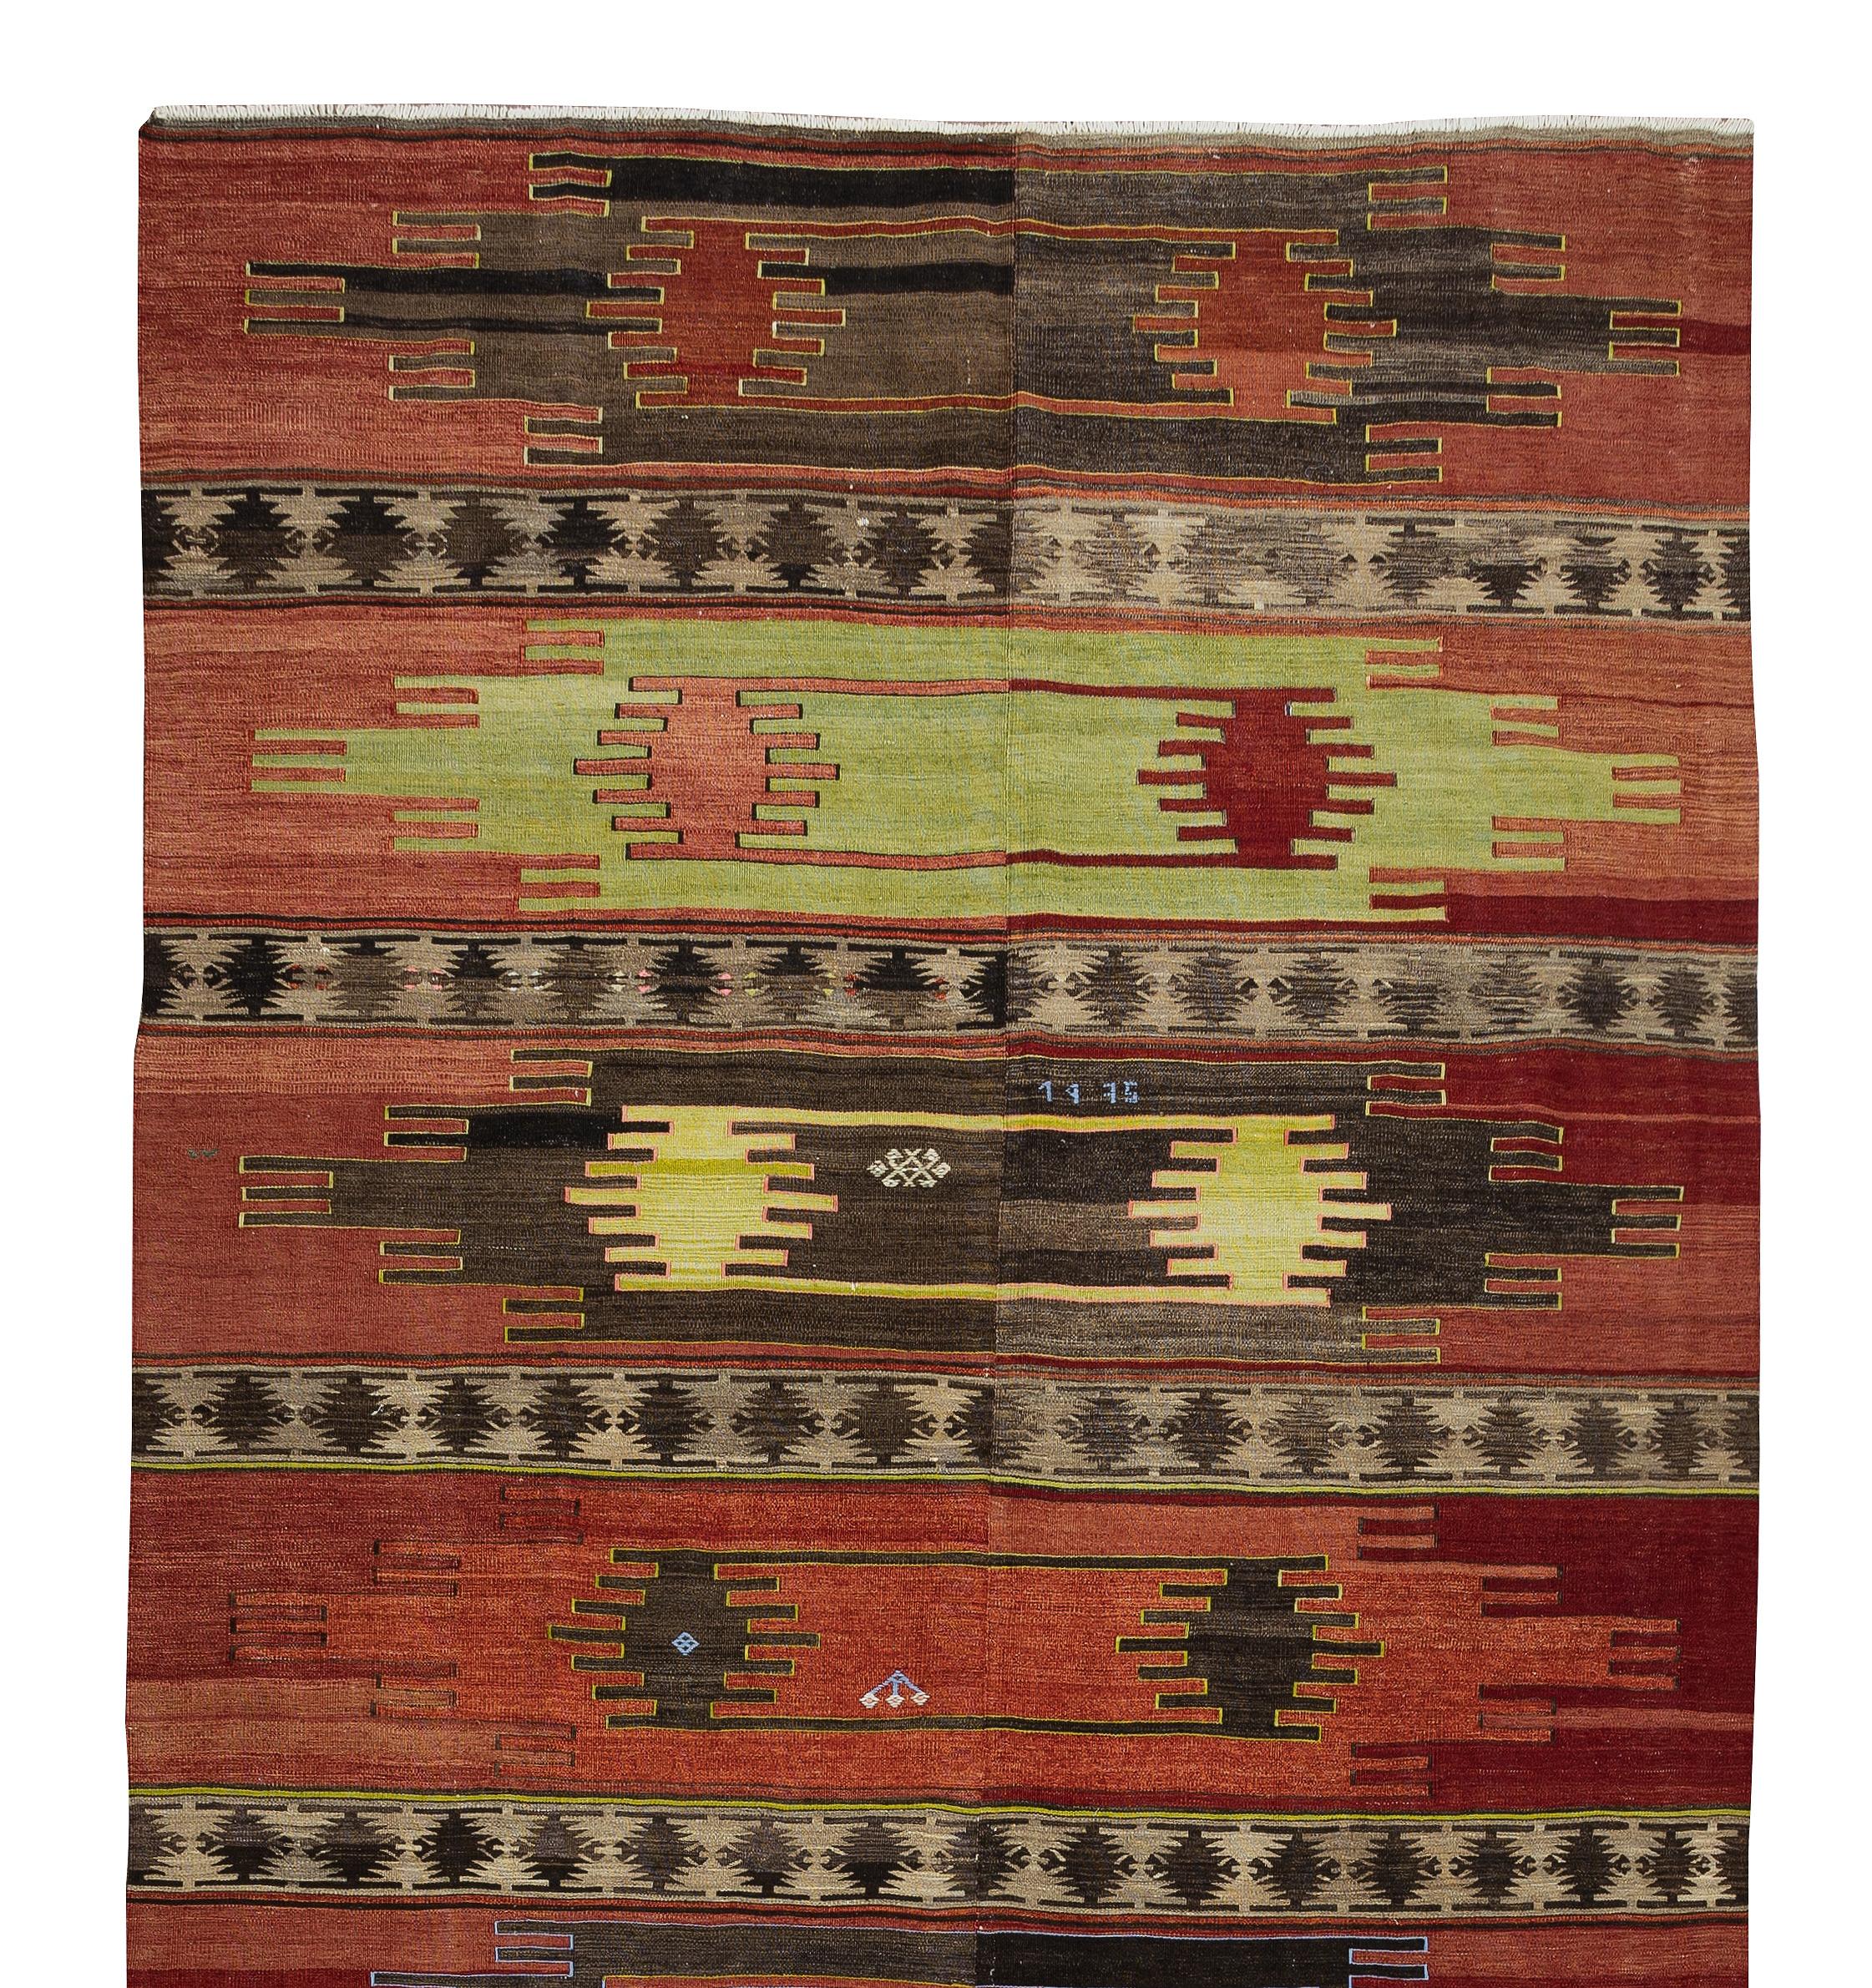 6.4x14 Ft Handmade Nomadic Turkish Runner Kilim 'Flat Weave', Vintage Ethnic Rug In Good Condition For Sale In Philadelphia, PA